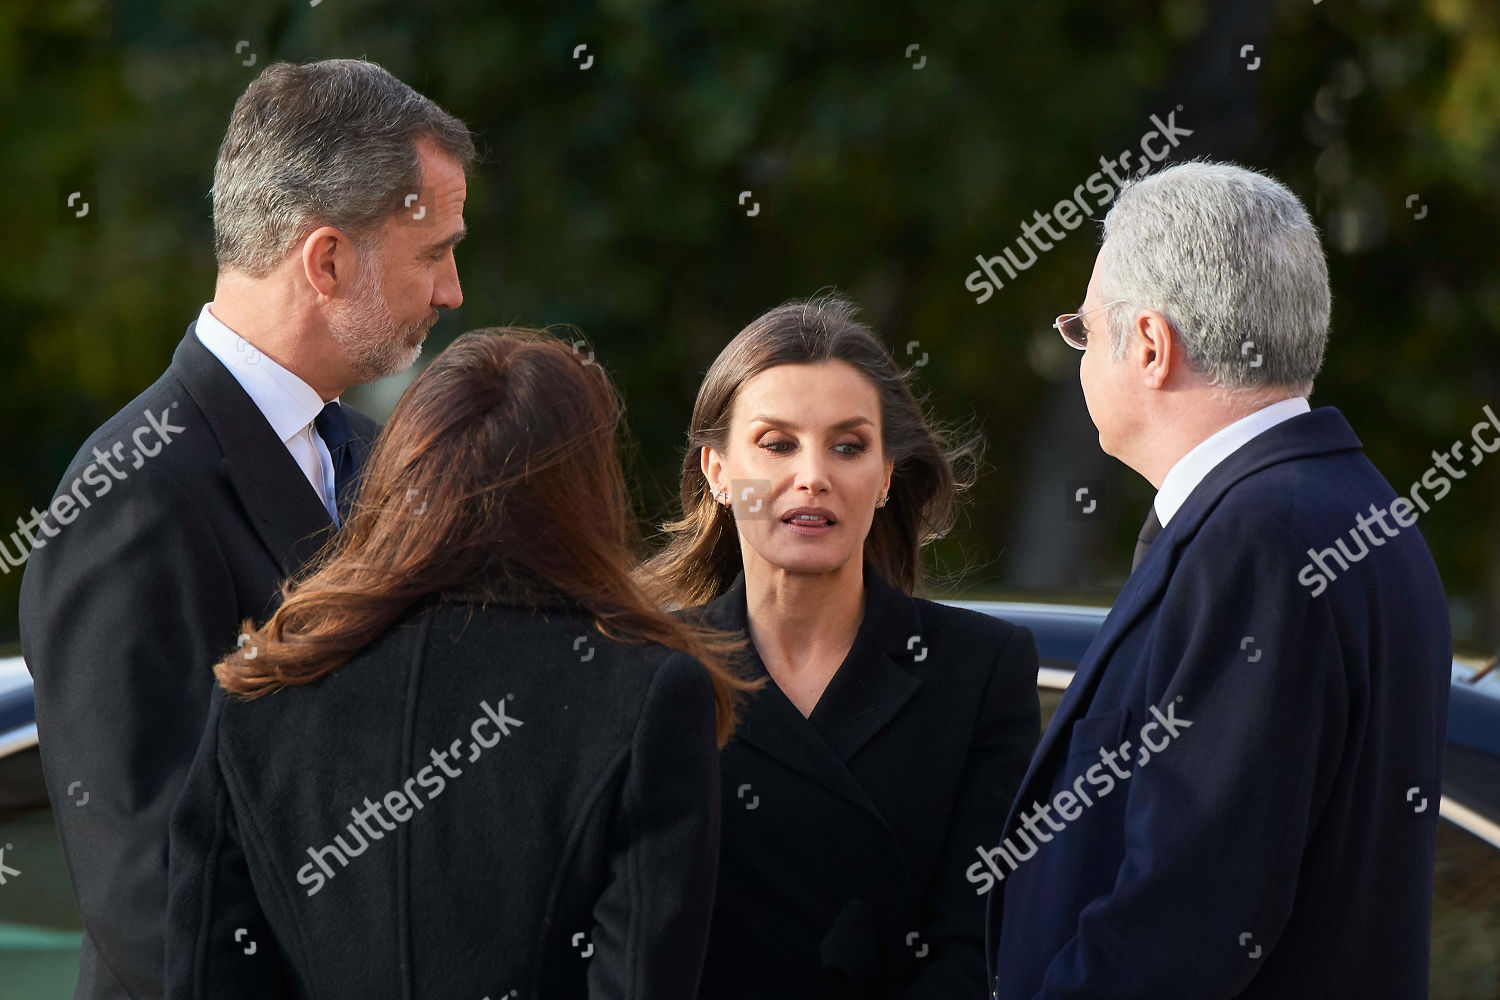 spanish-royal-couple-attend-funeral-mass-of-jose-pedro-perez-llorca-madrid-spain-shutterstock-editorial-10187228ah.jpg